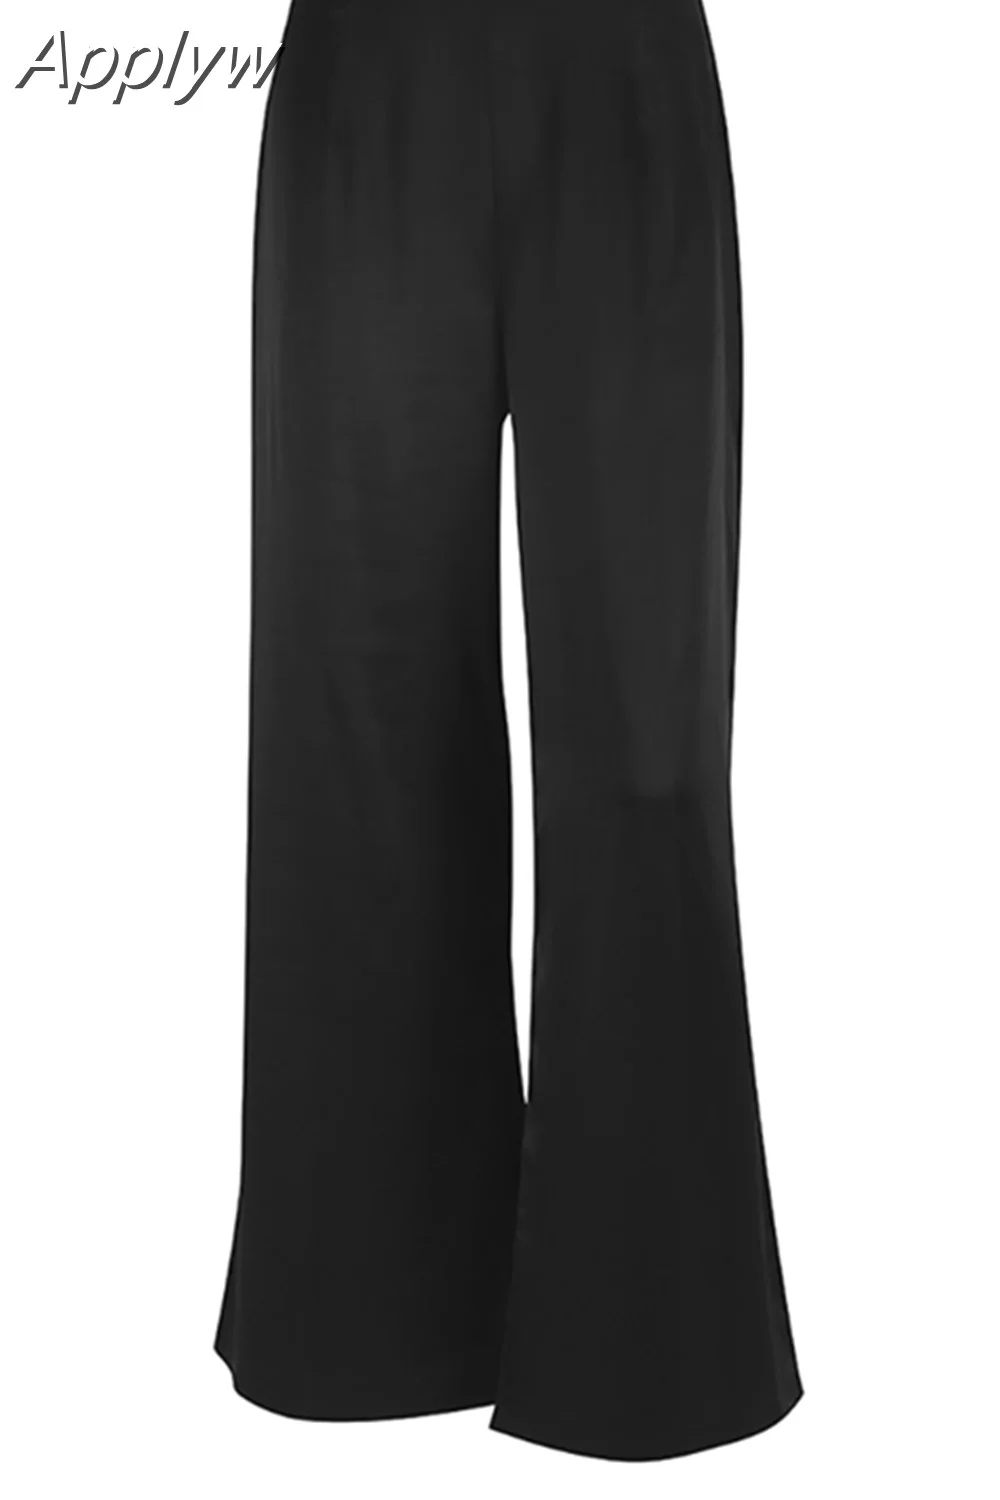 Applyw Fashion Classy Women Palazzo Pants High Waist Floor-Length Satin Trousers Spring Summer 2023 High Street Baggy Pants